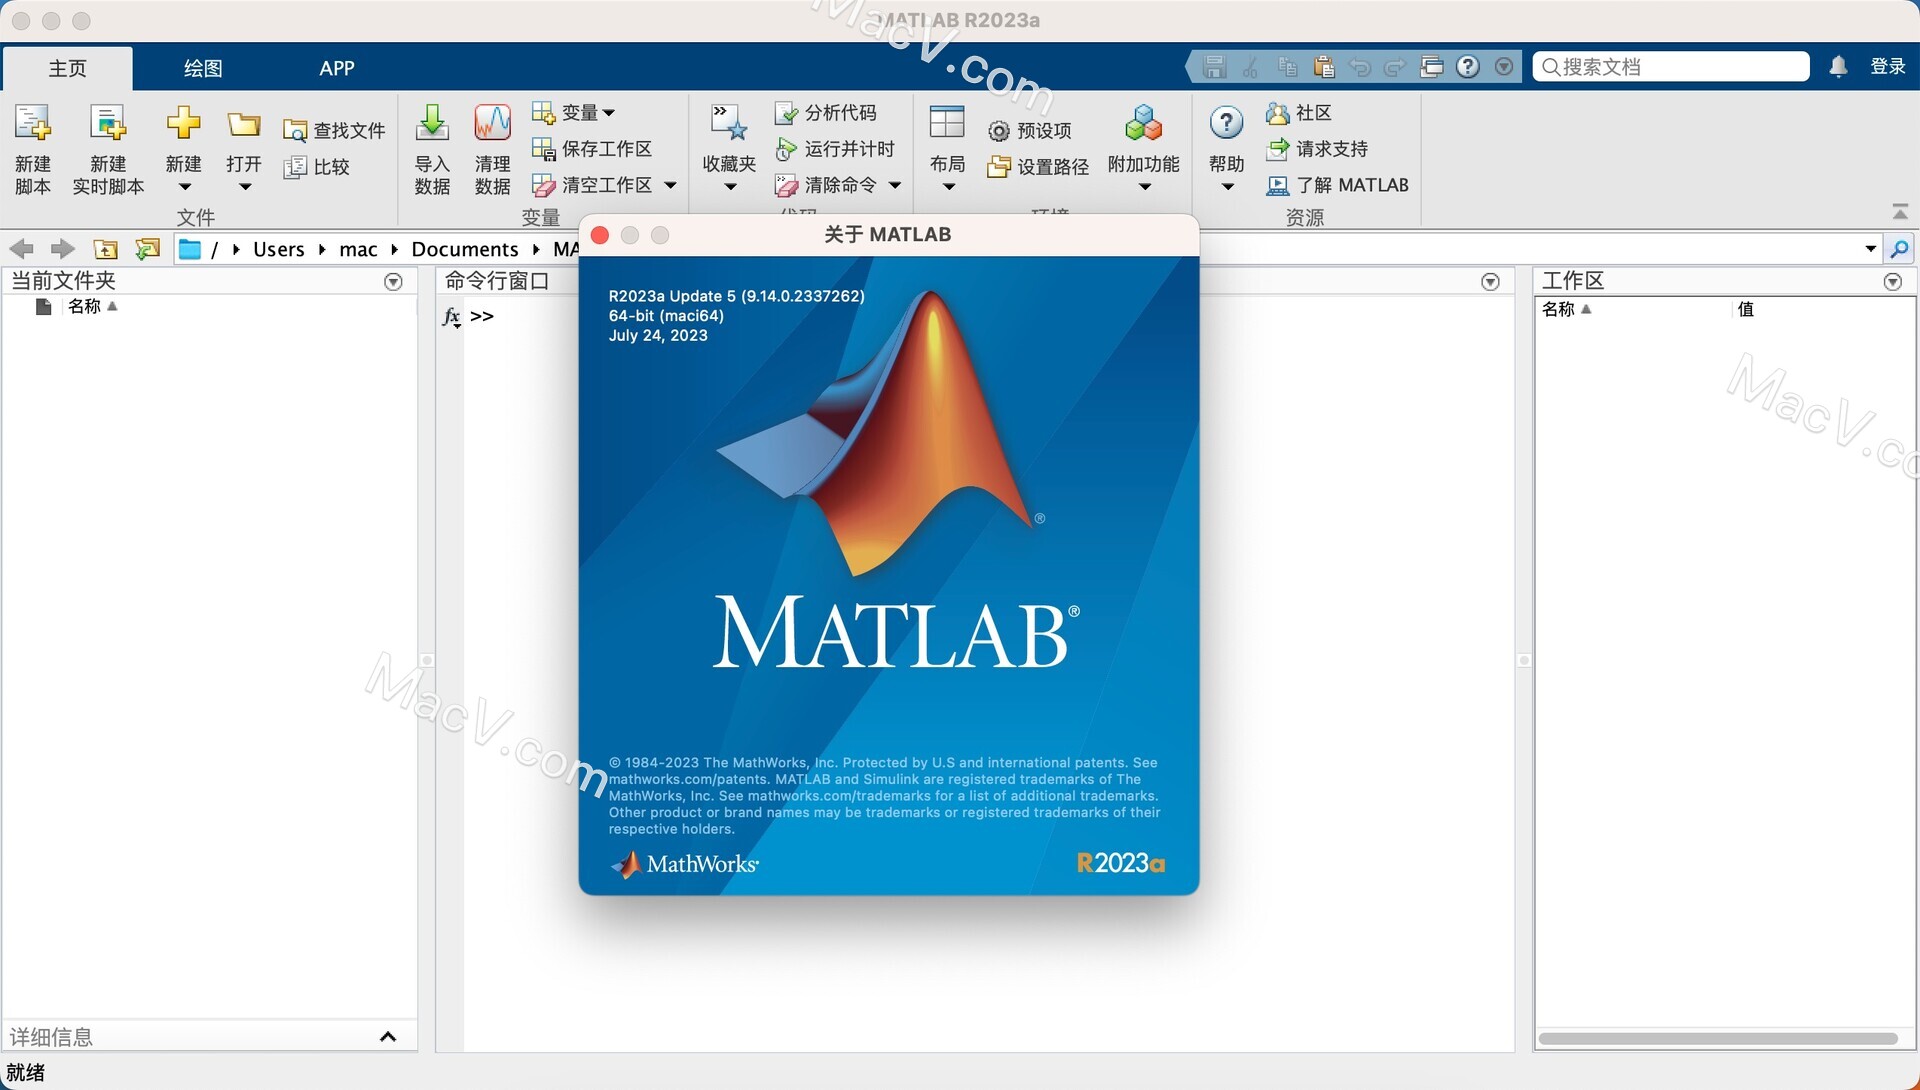 MathWorks MATLAB R2023a 9.14.0.2337262 free download